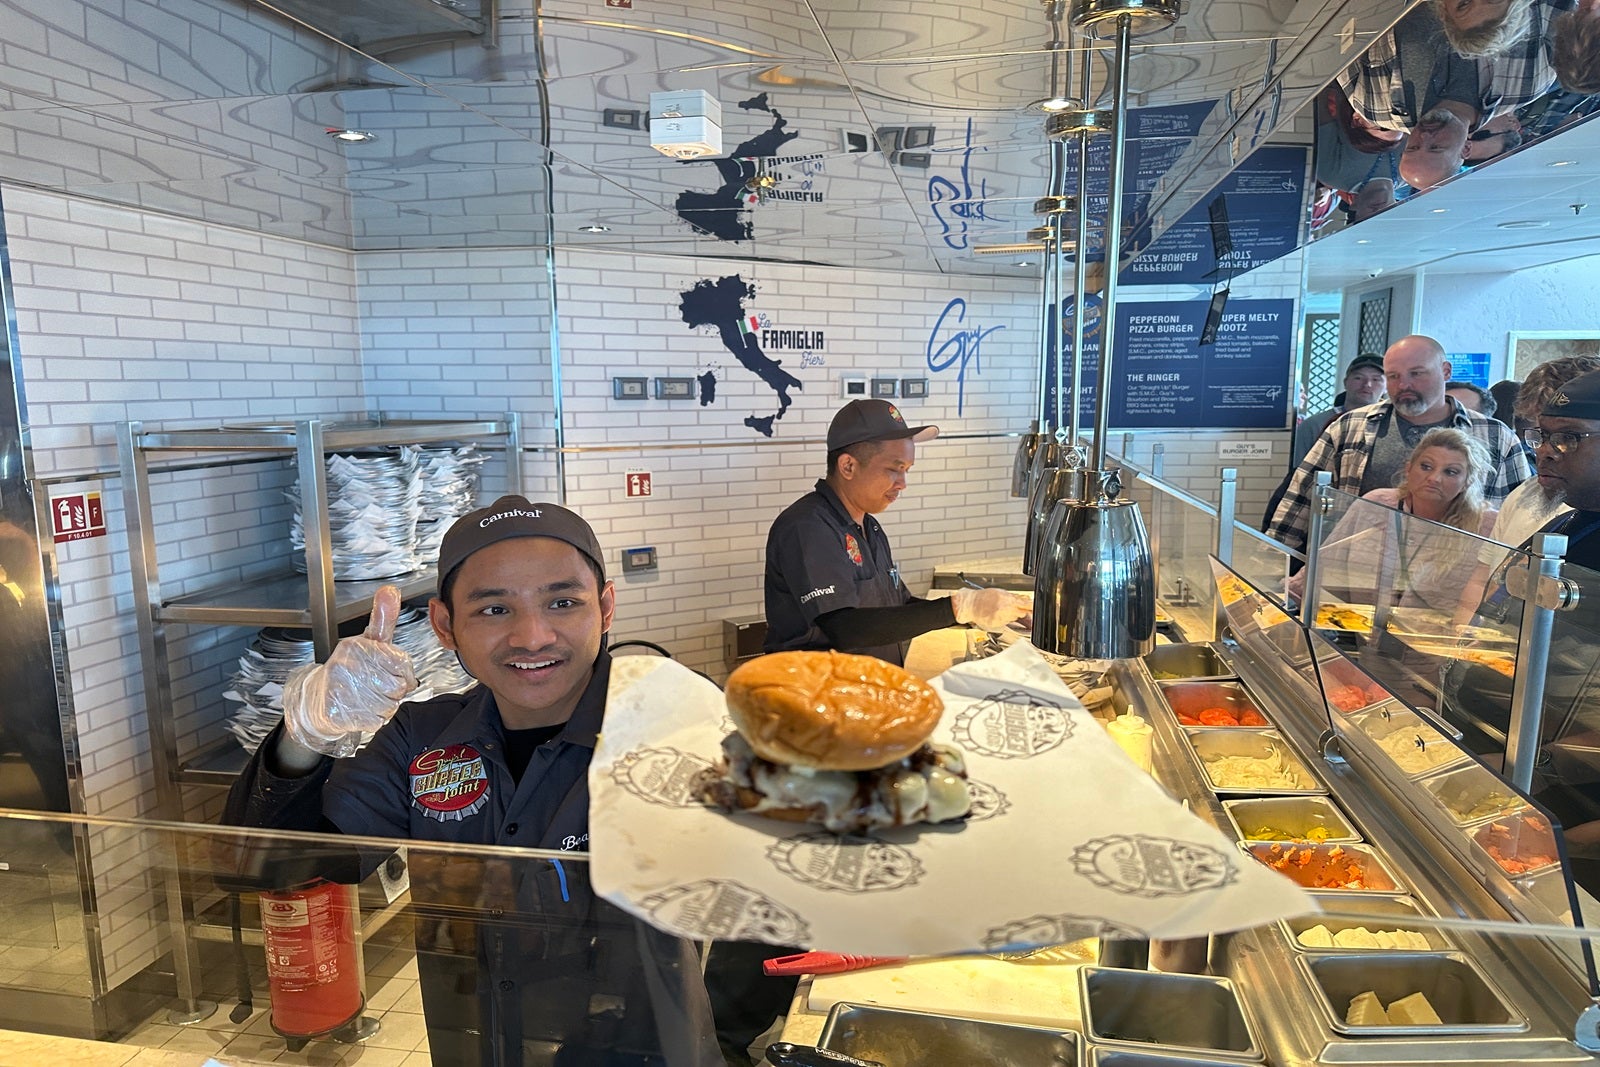 A cruise ship crew member hands a cheeseburger over the counter to a customer